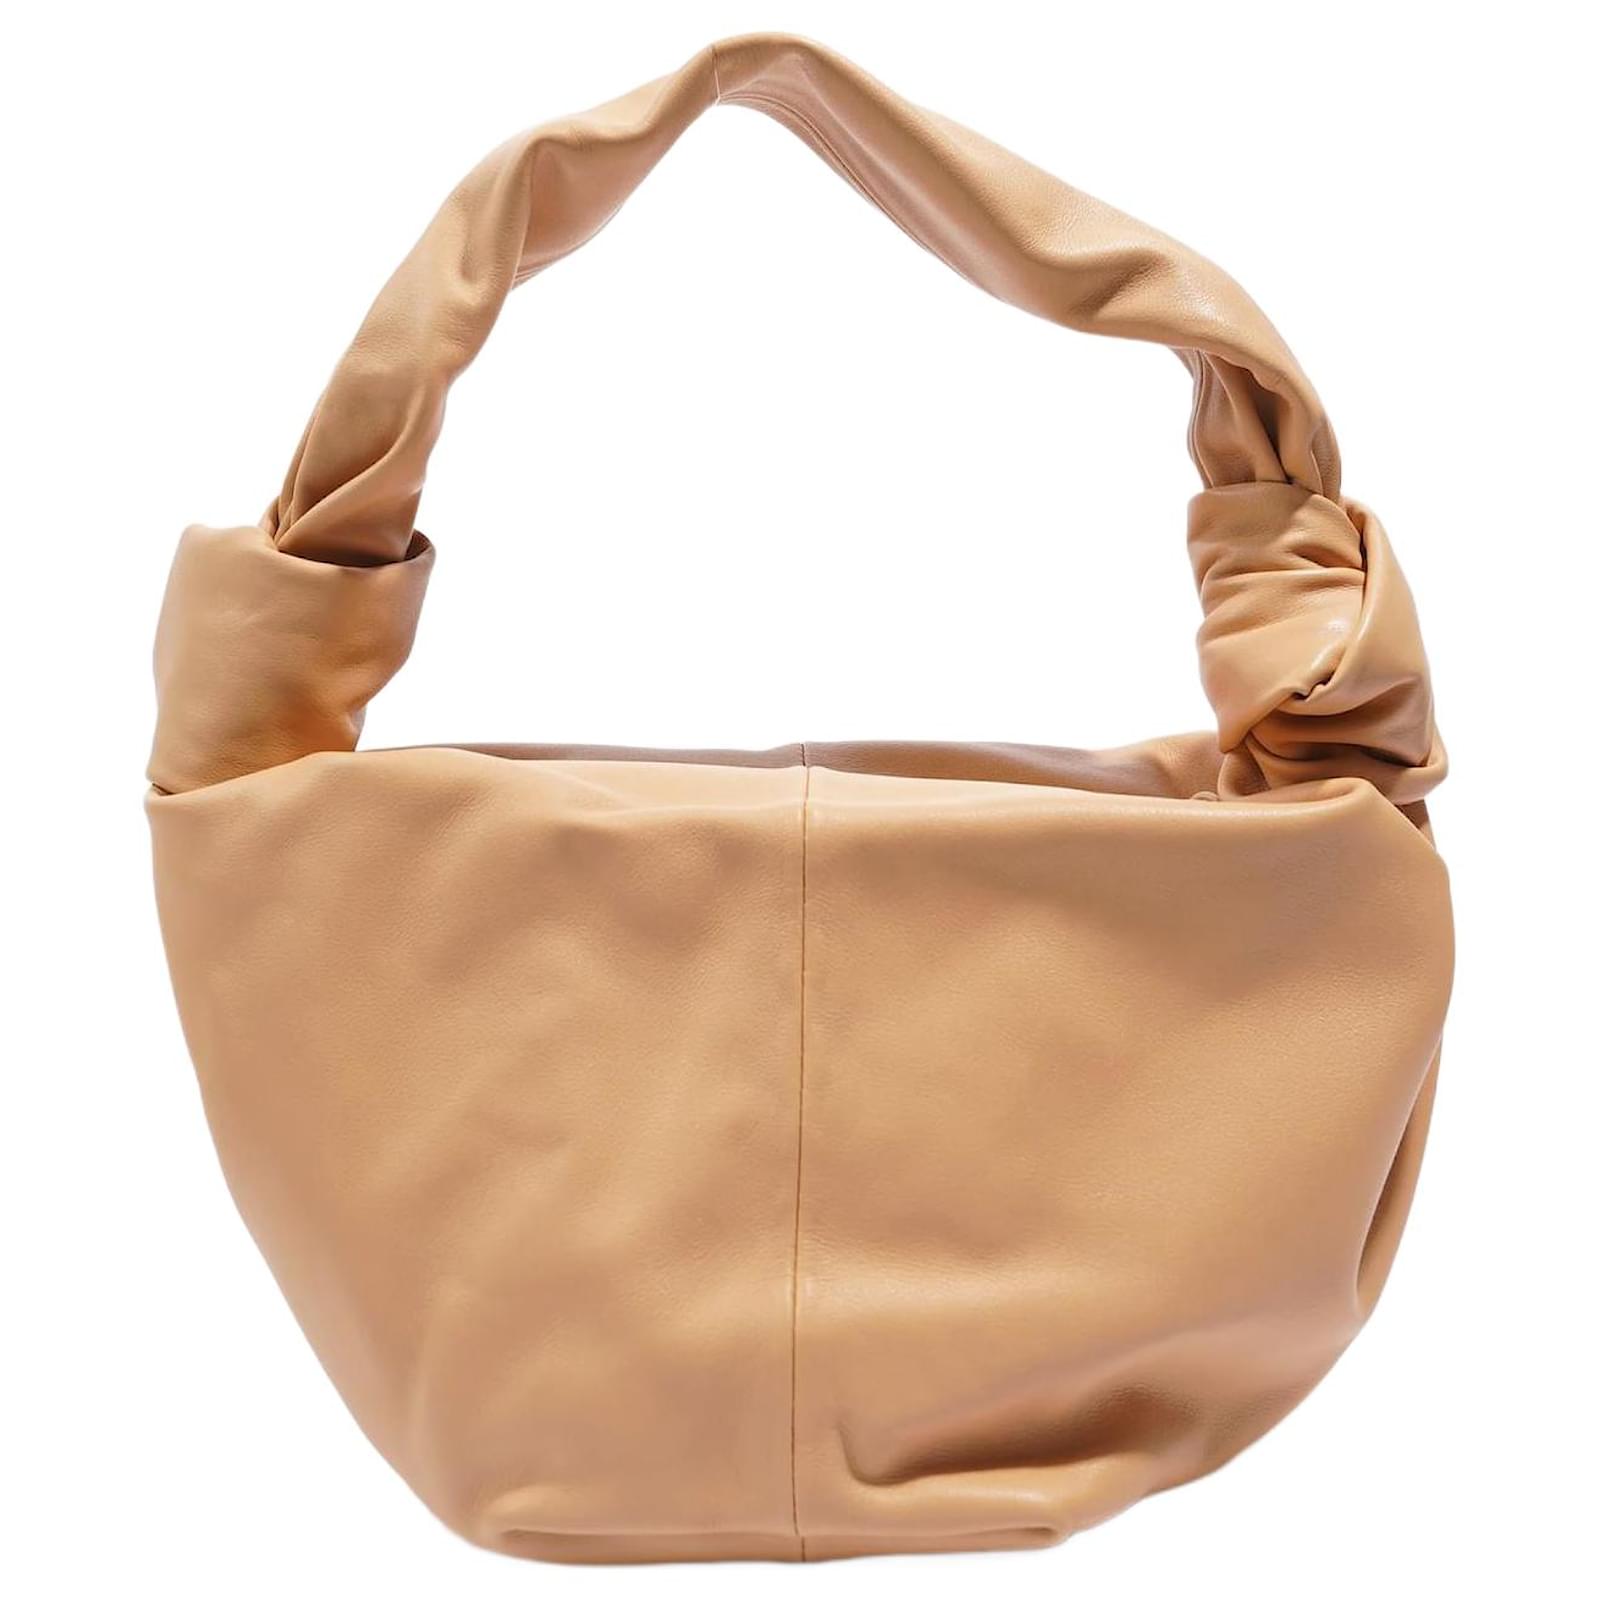 Bottega Veneta Teen Jodie Metallic Intrecciato Top-Handle Bag